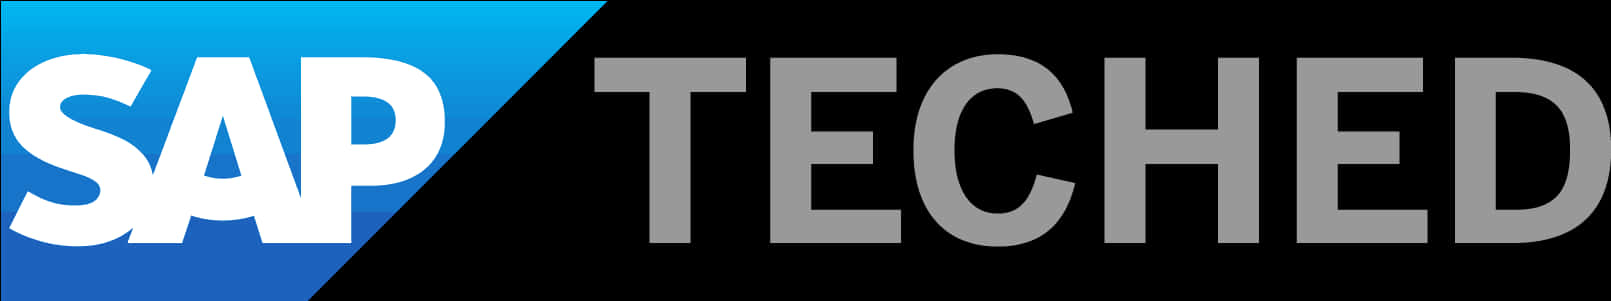 S A P Tech Ed Event Logo PNG